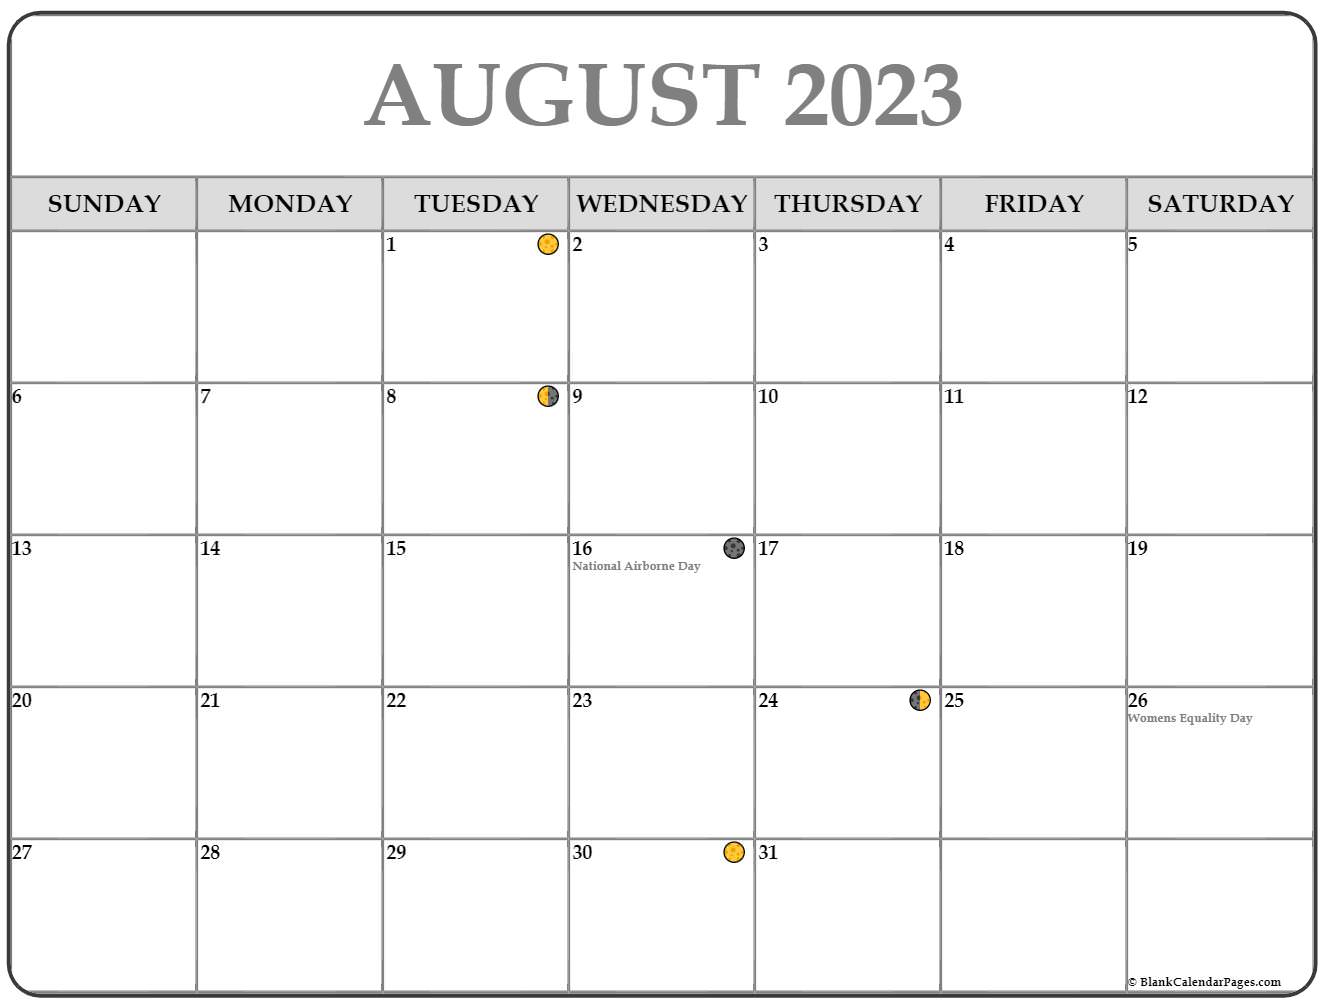 august-2023-lunar-calendar-moon-phase-calendar